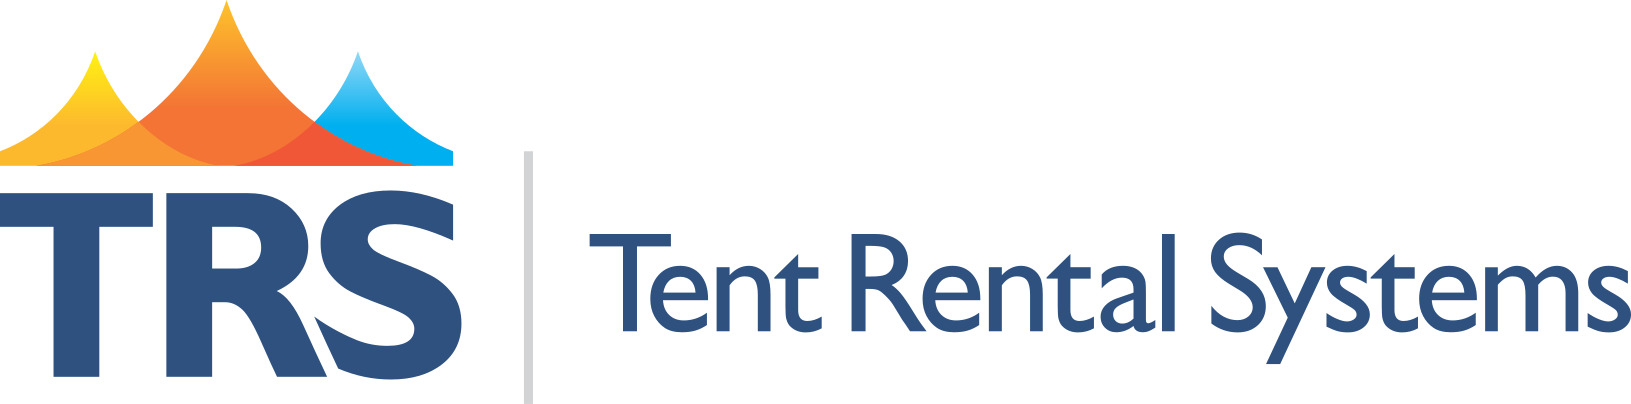 tent-rental-systems-horizontal-logo.jpg